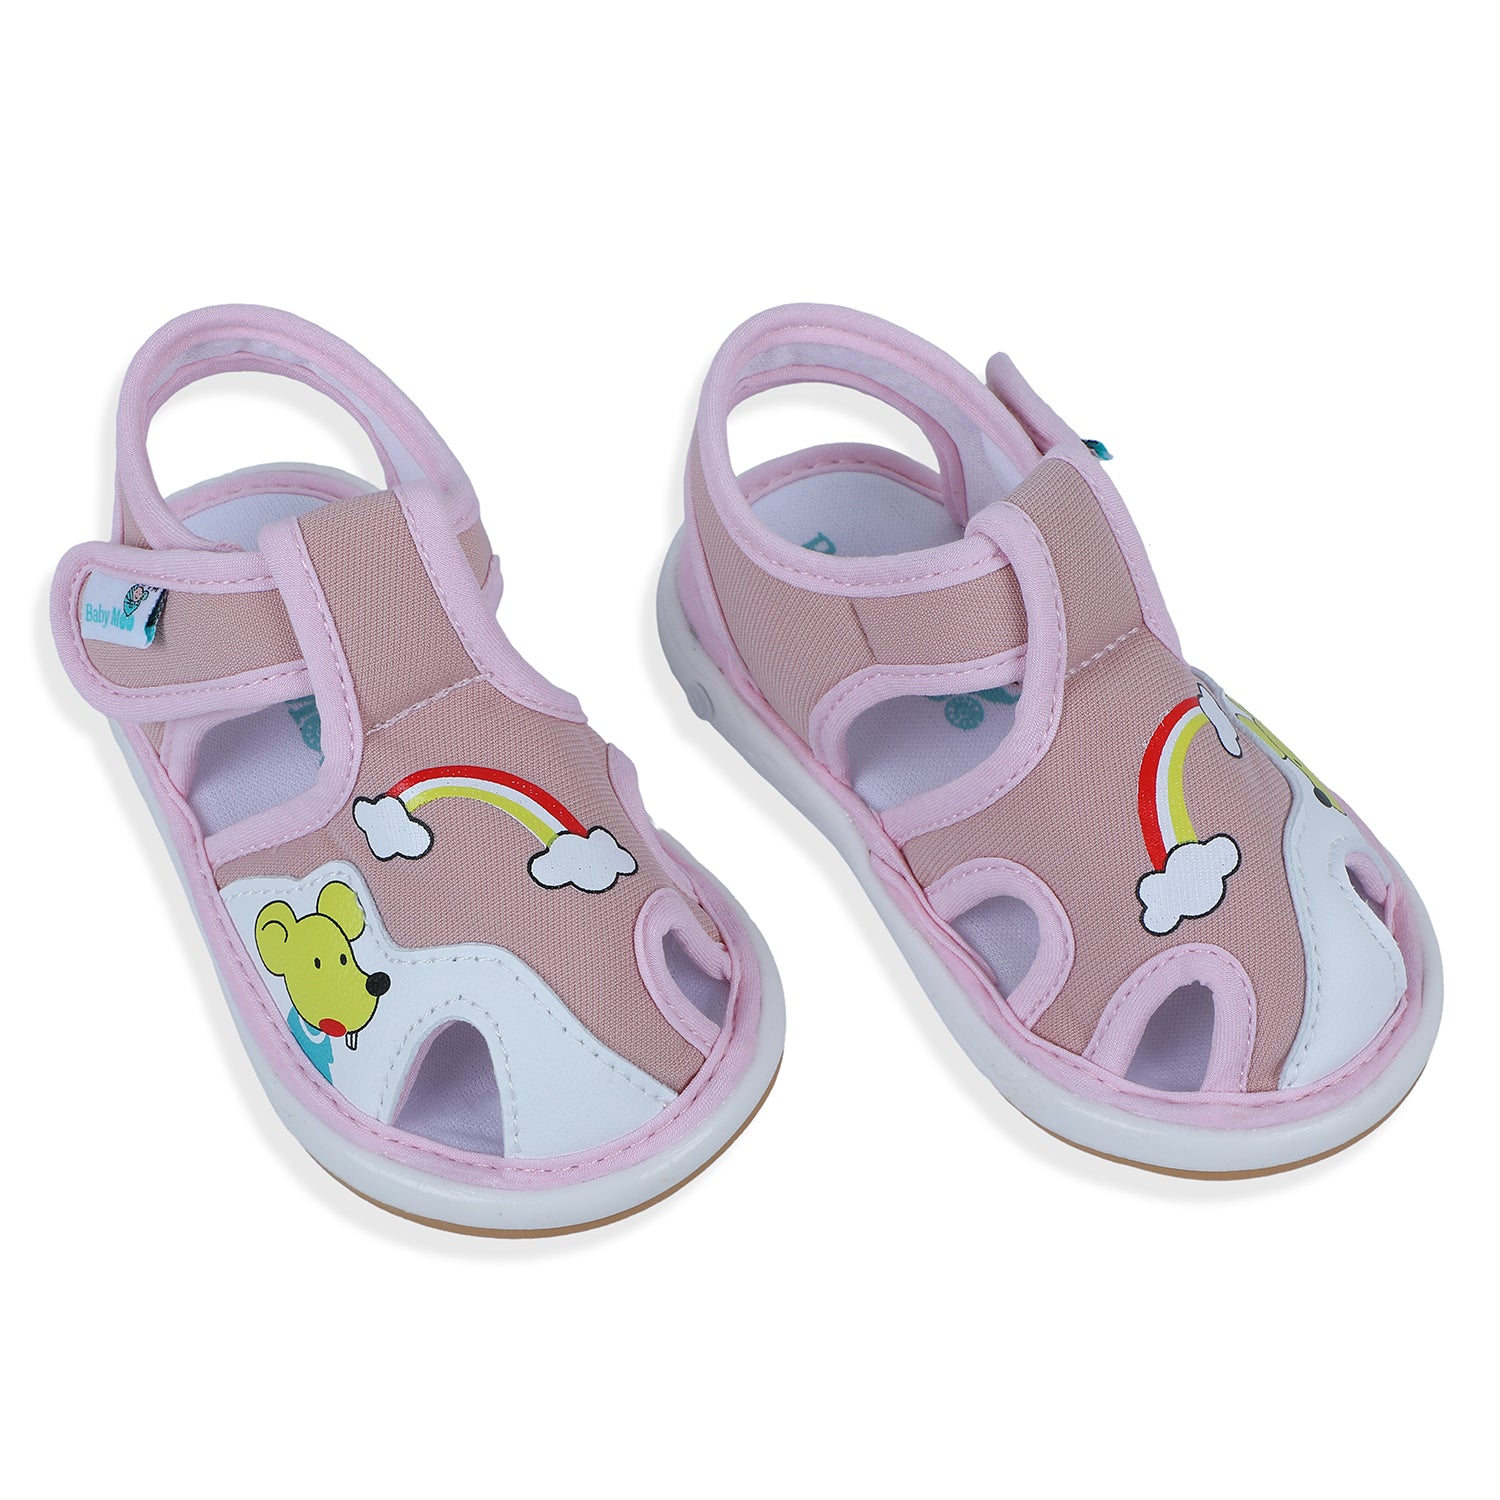 Baby Moo Rainbow Chu-Chu Sound Breathable Anti-Skid Sandals - Pink - Baby Moo